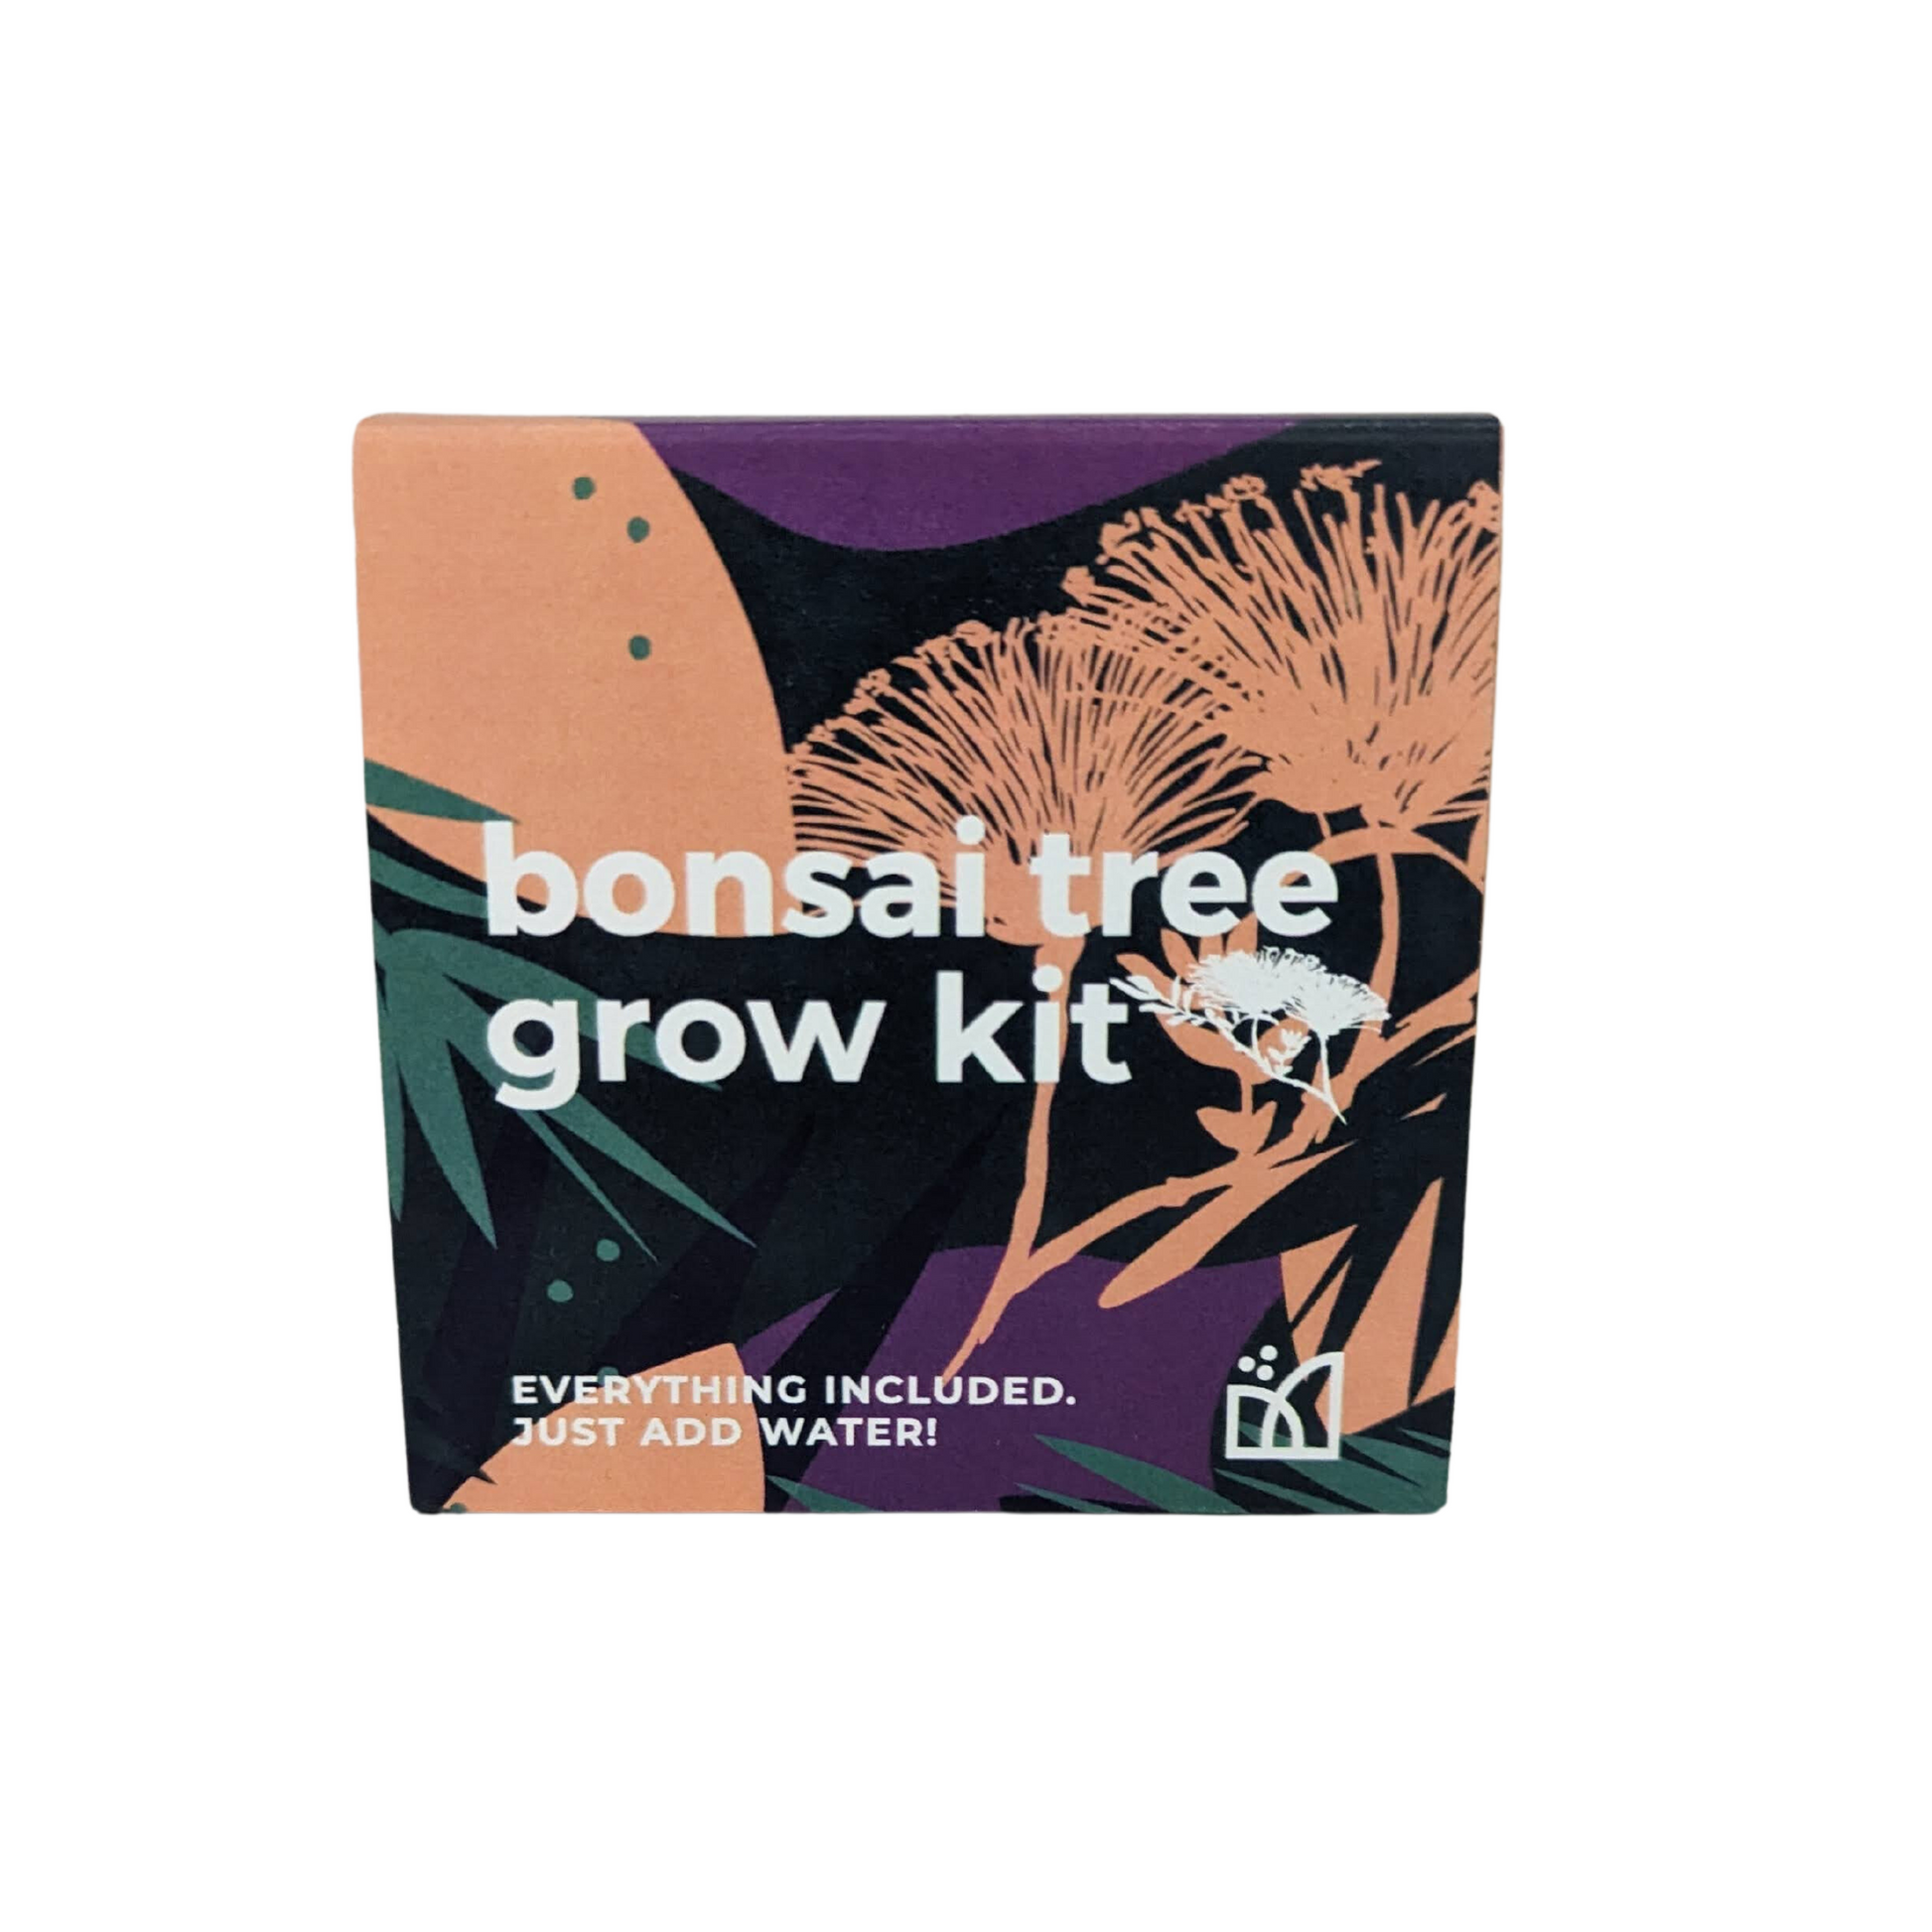 Grow Kit - Bonsai Tree - Sprigbox